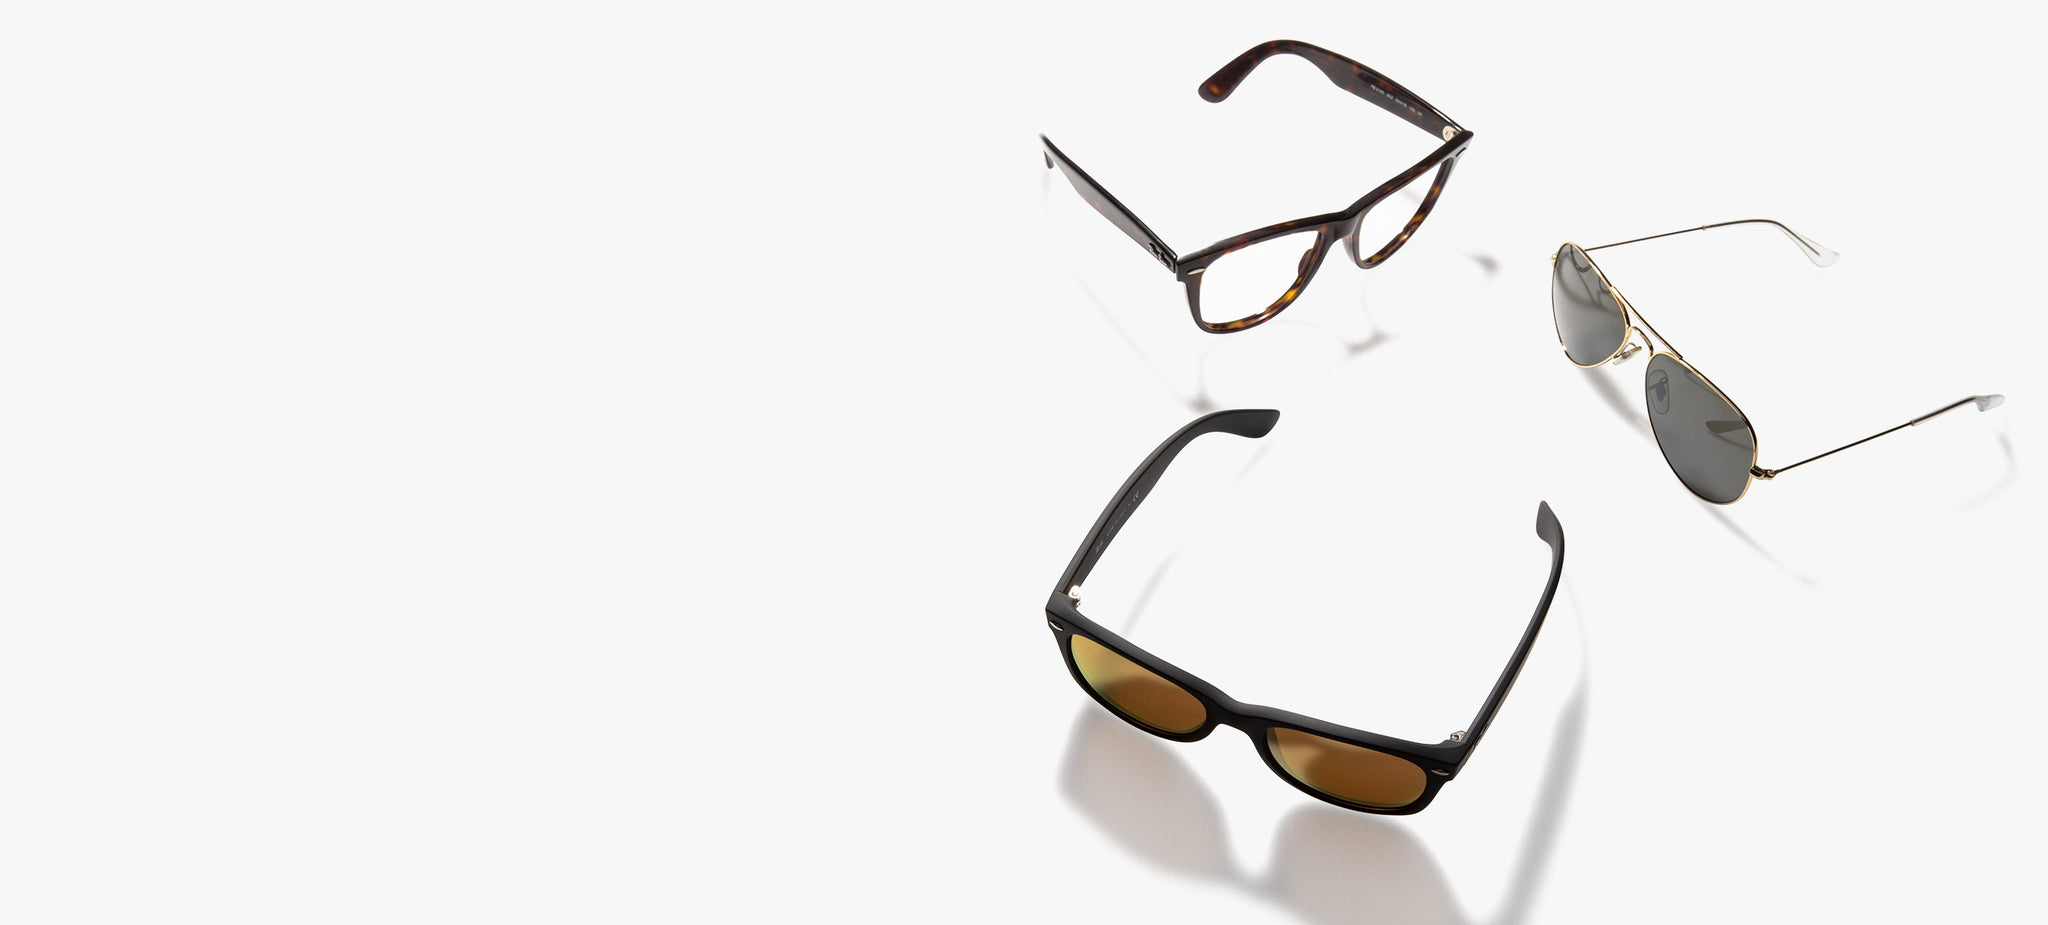 Three Ray-Ban glasses with Revant prescription lenses